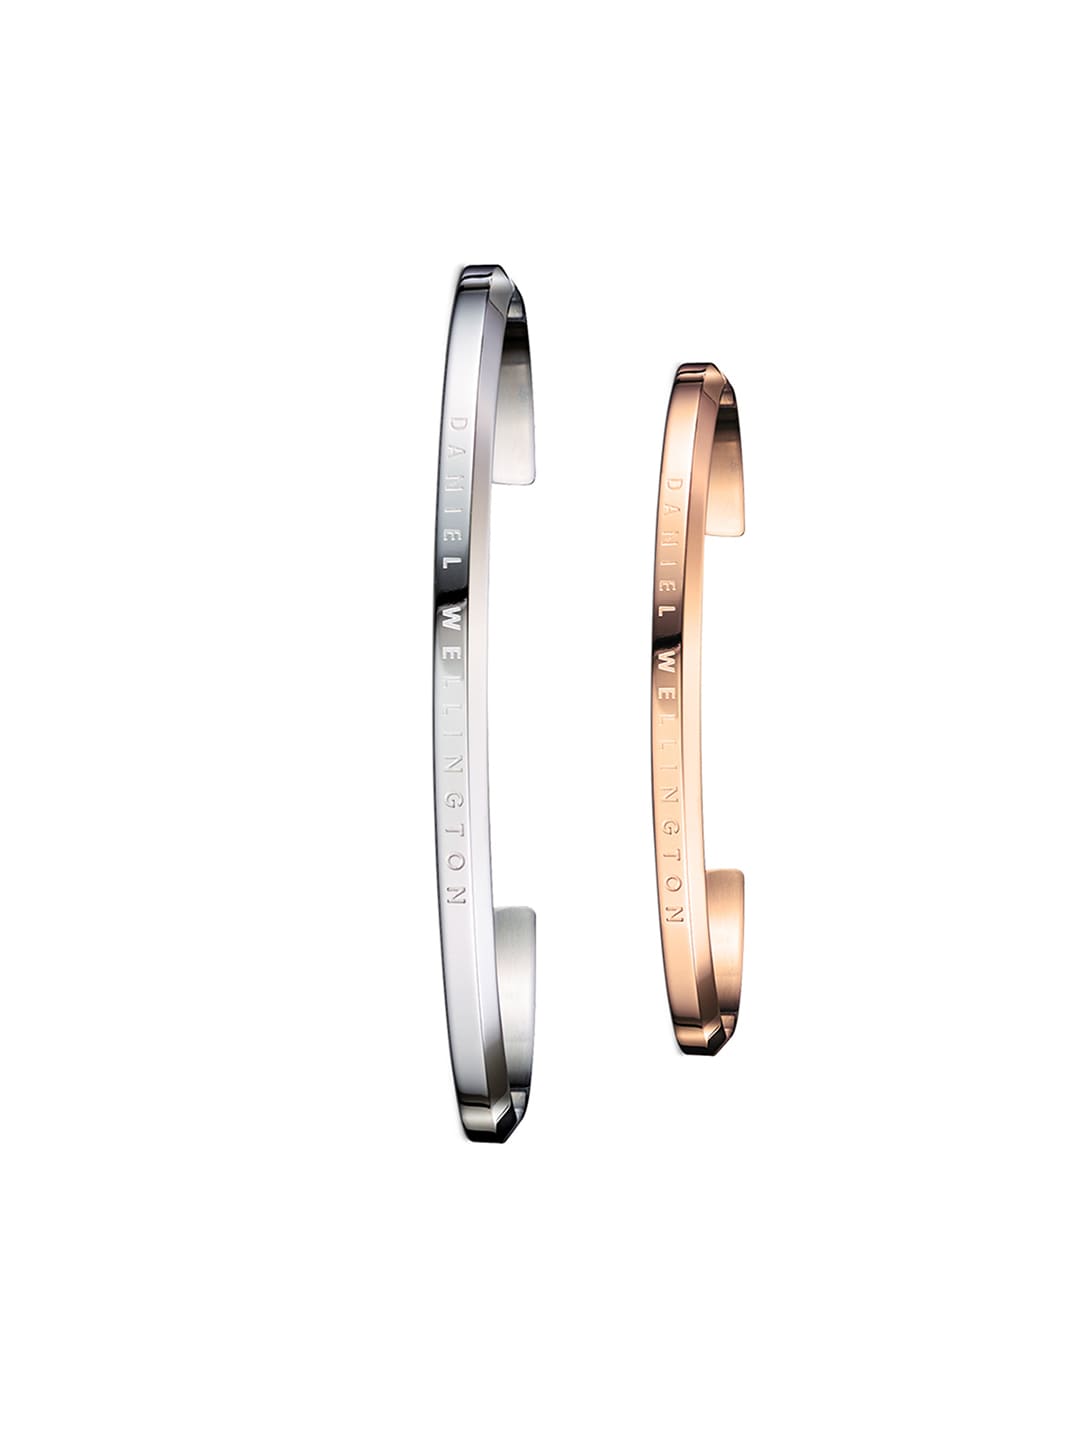 Daniel wellington Unisex Classic Rose Gold & Silver Bracelet Set - Small & Large DW00500180 Price in India